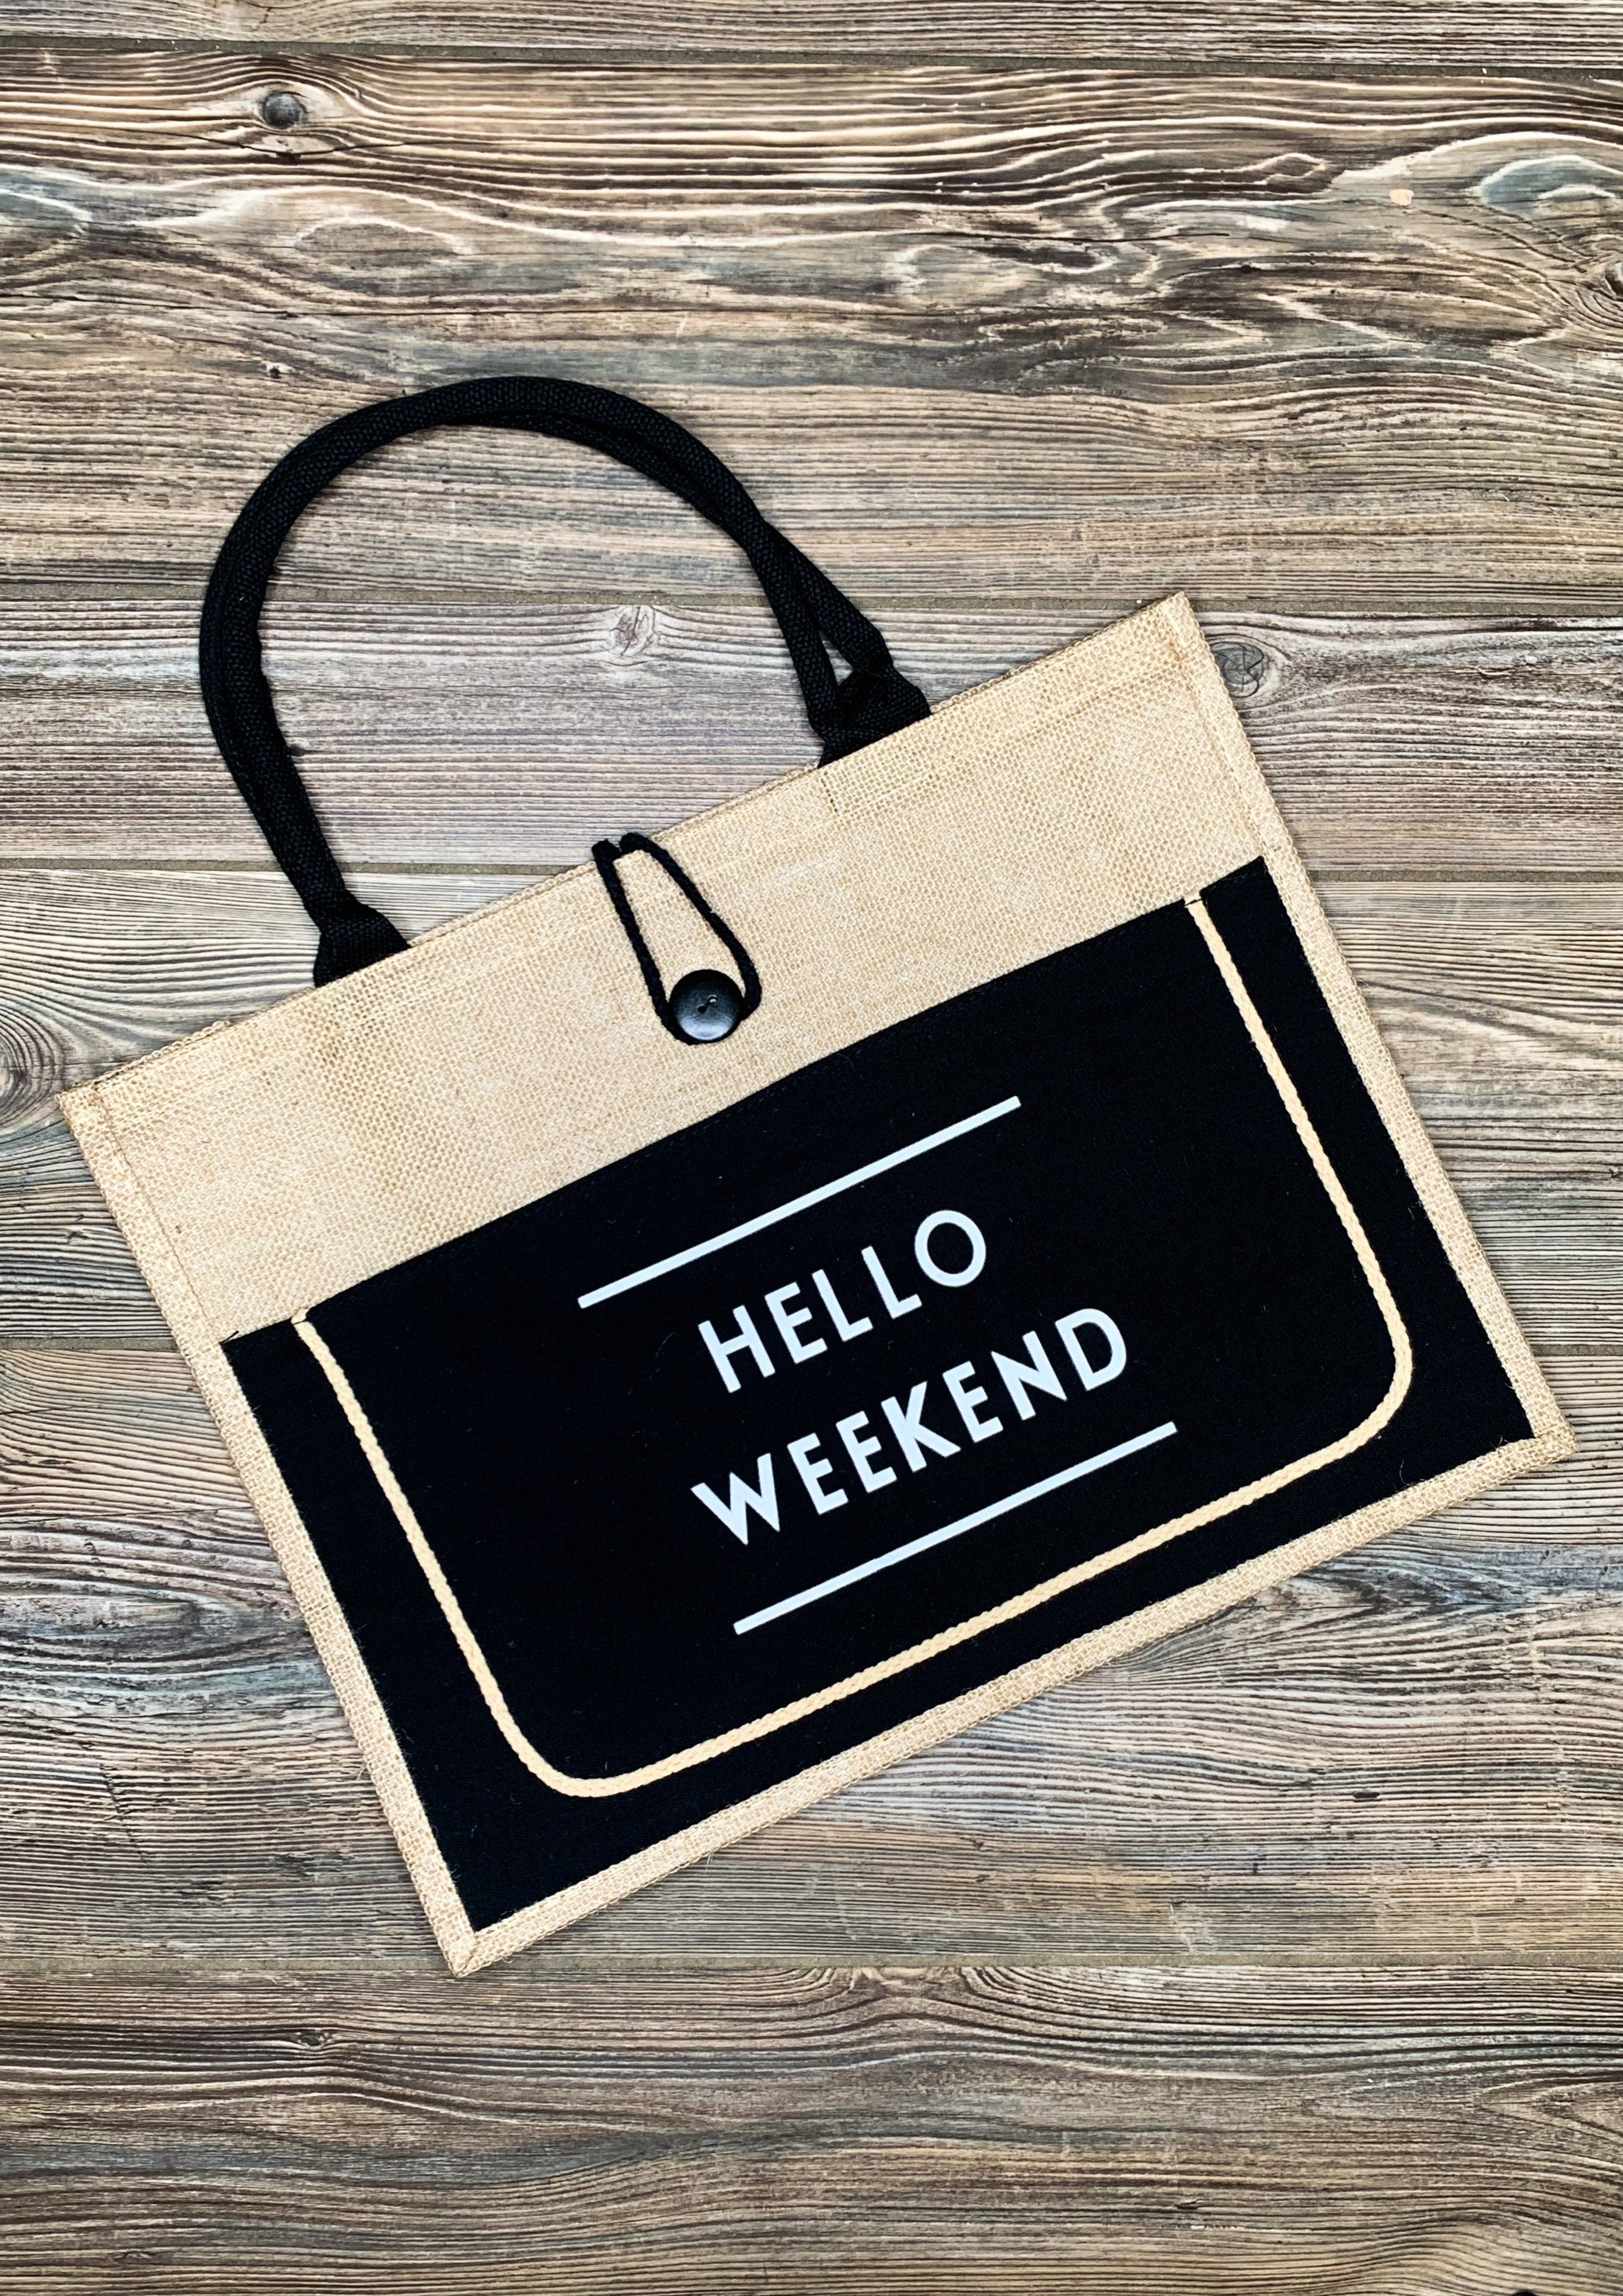 Burlap bag with black felt stating "hello weekend"